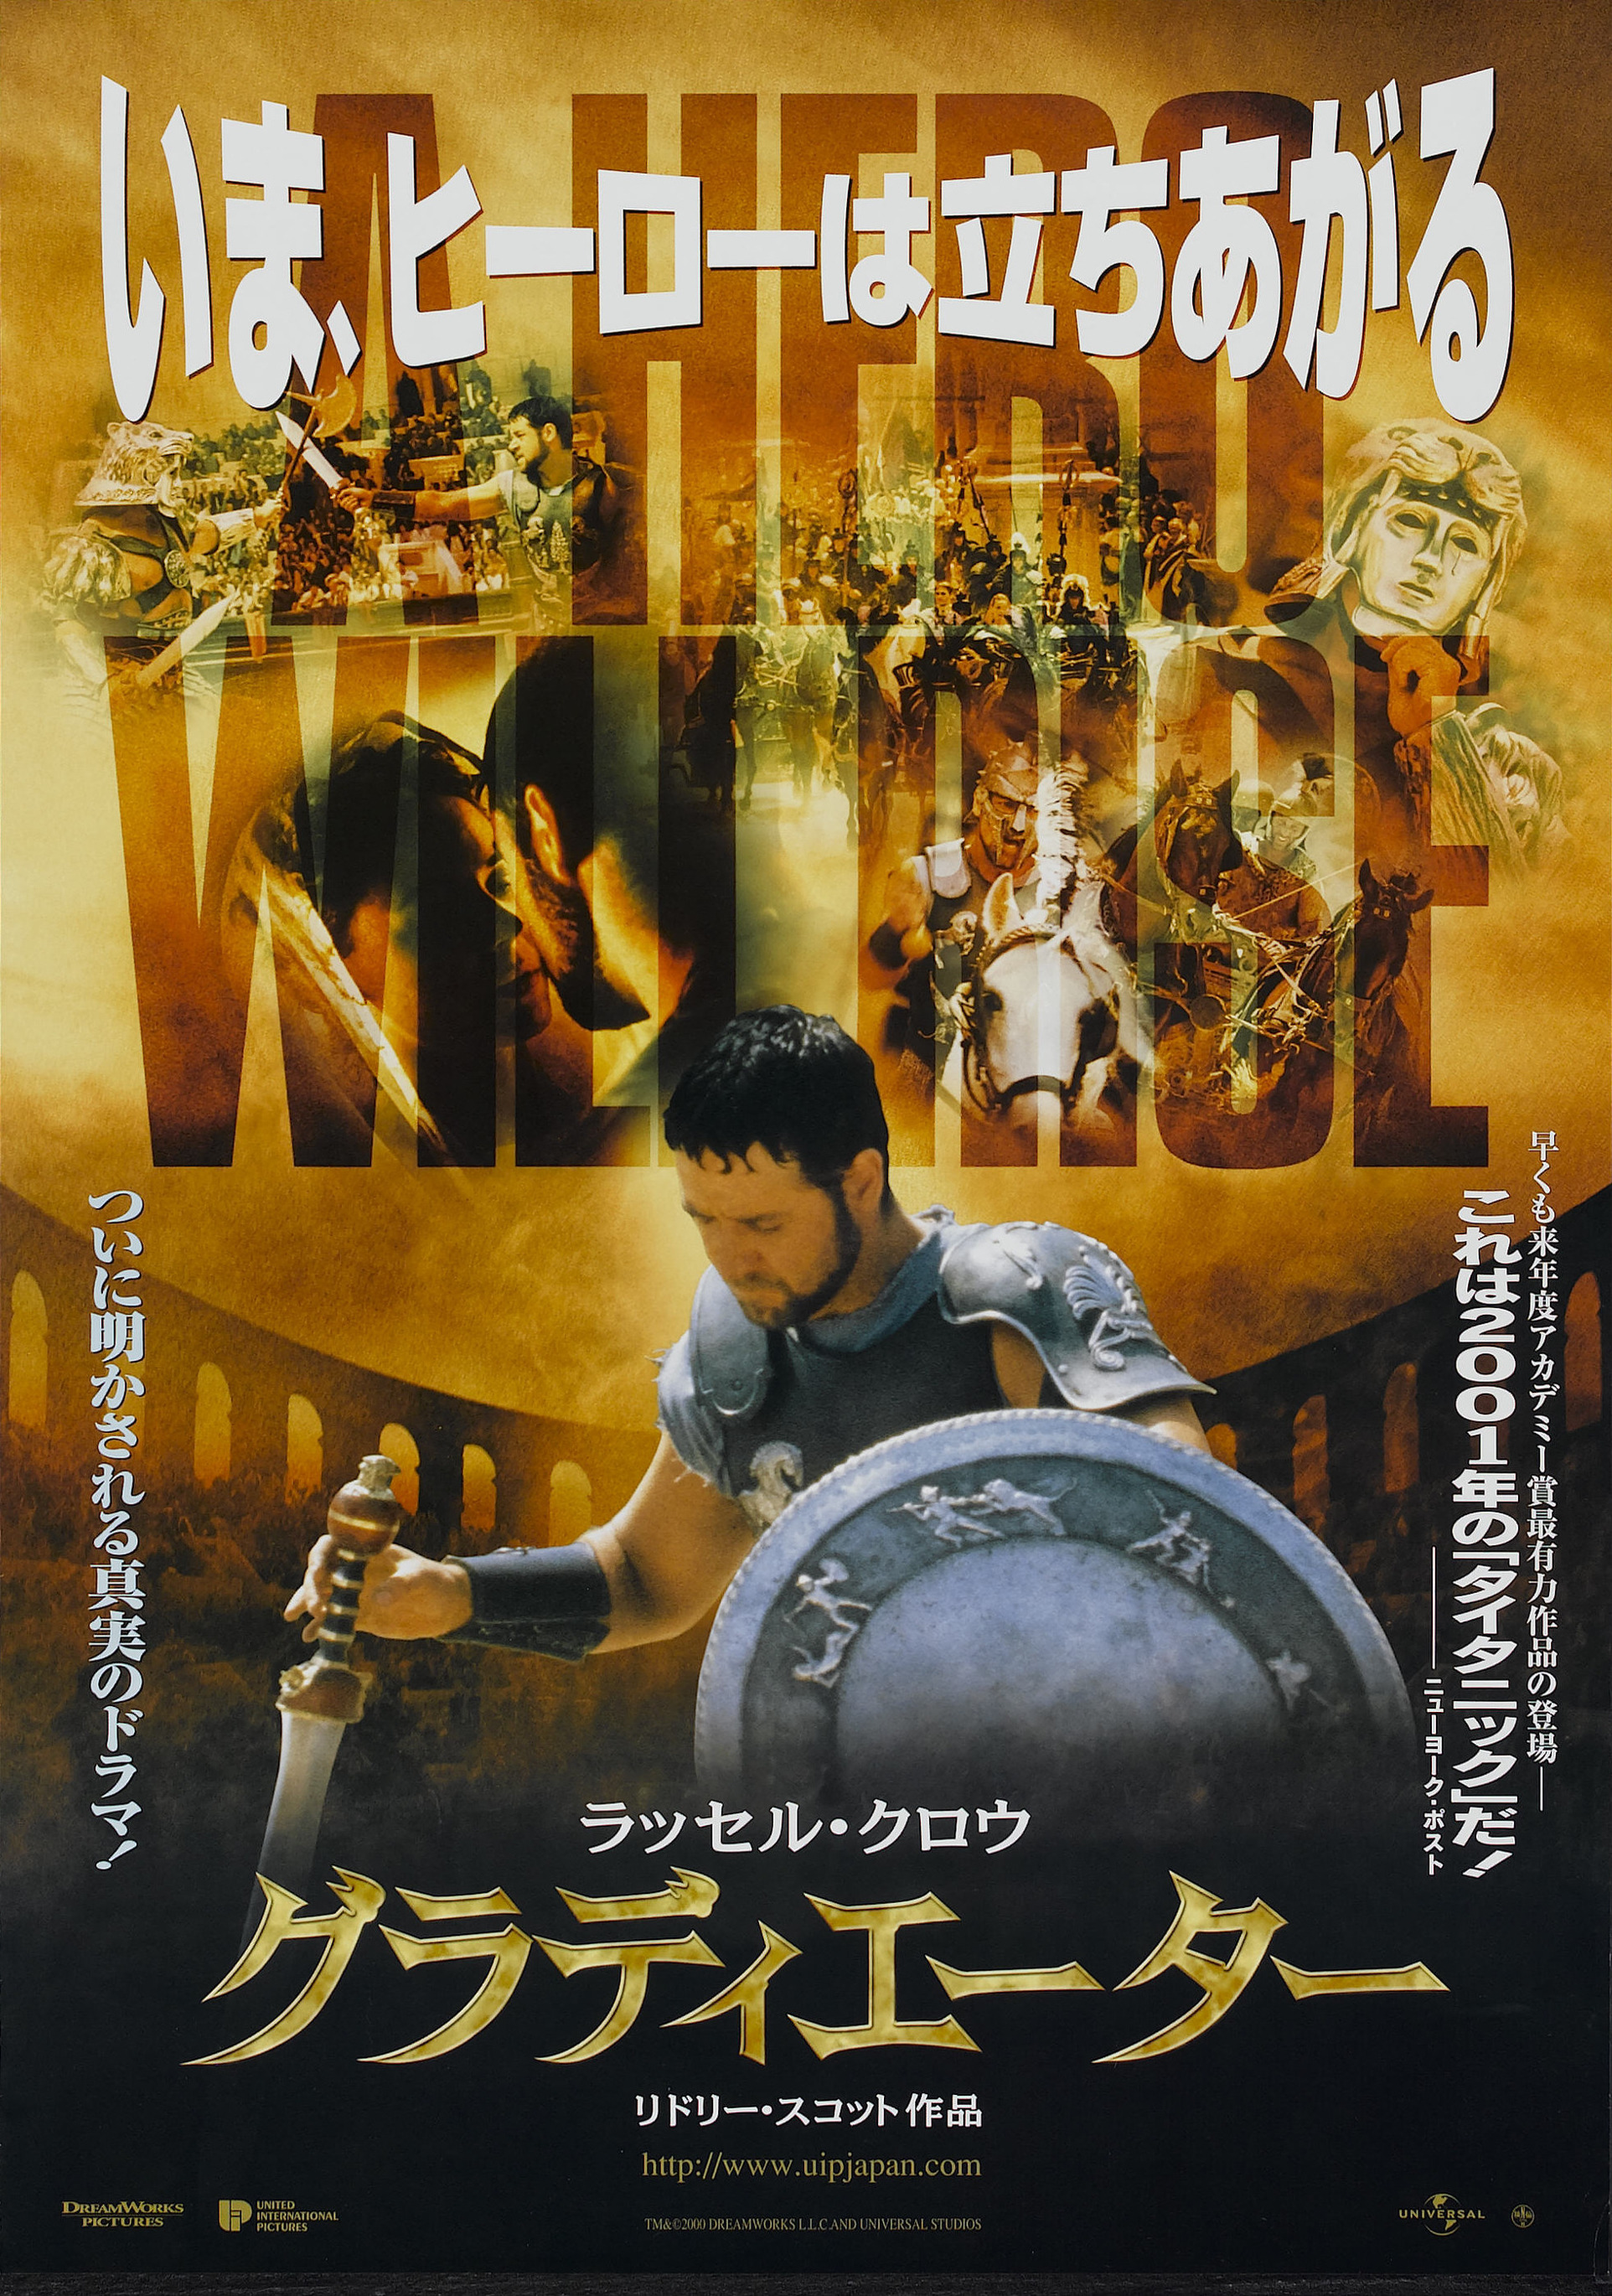 Mega Sized Movie Poster Image for Gladiator (#4 of 4)